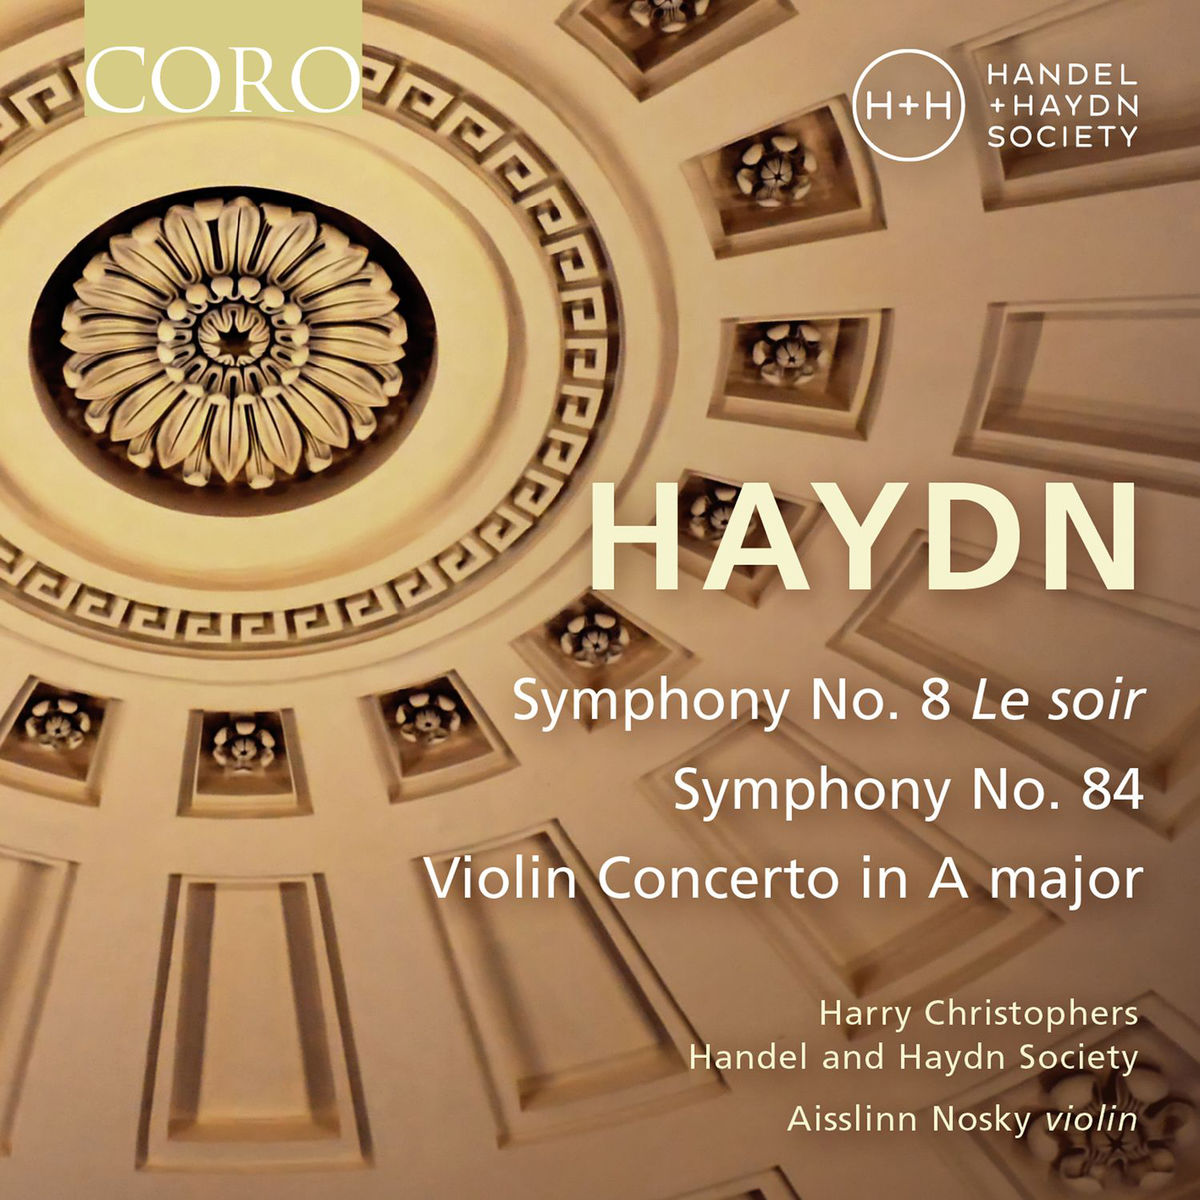 Handel and Haydn Society, Harry Christophers & Aisslinn Nosky - Haydn: Symphonies Nos. 8 & 84 - Violin Concerto in A Major (2017) [Qobuz FLAC 24bit/96kHz]